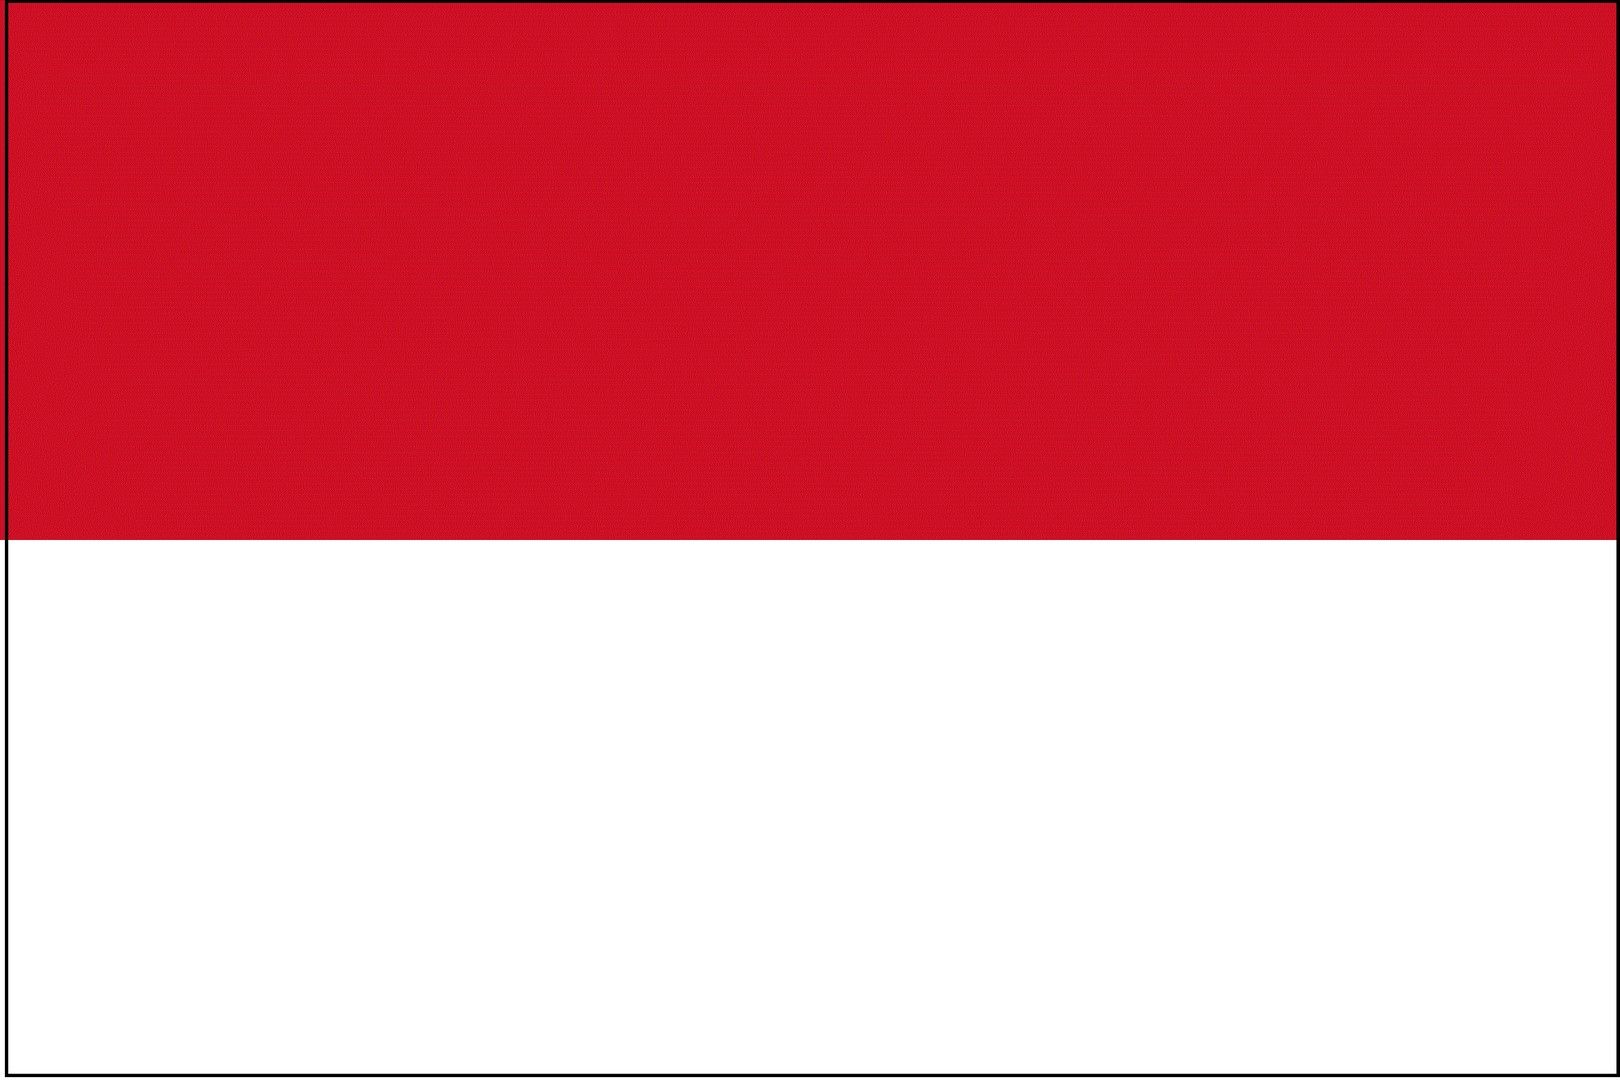 Flag of Indonesia wallpaper. Indonesian flag, Indonesia flag, Monaco flag